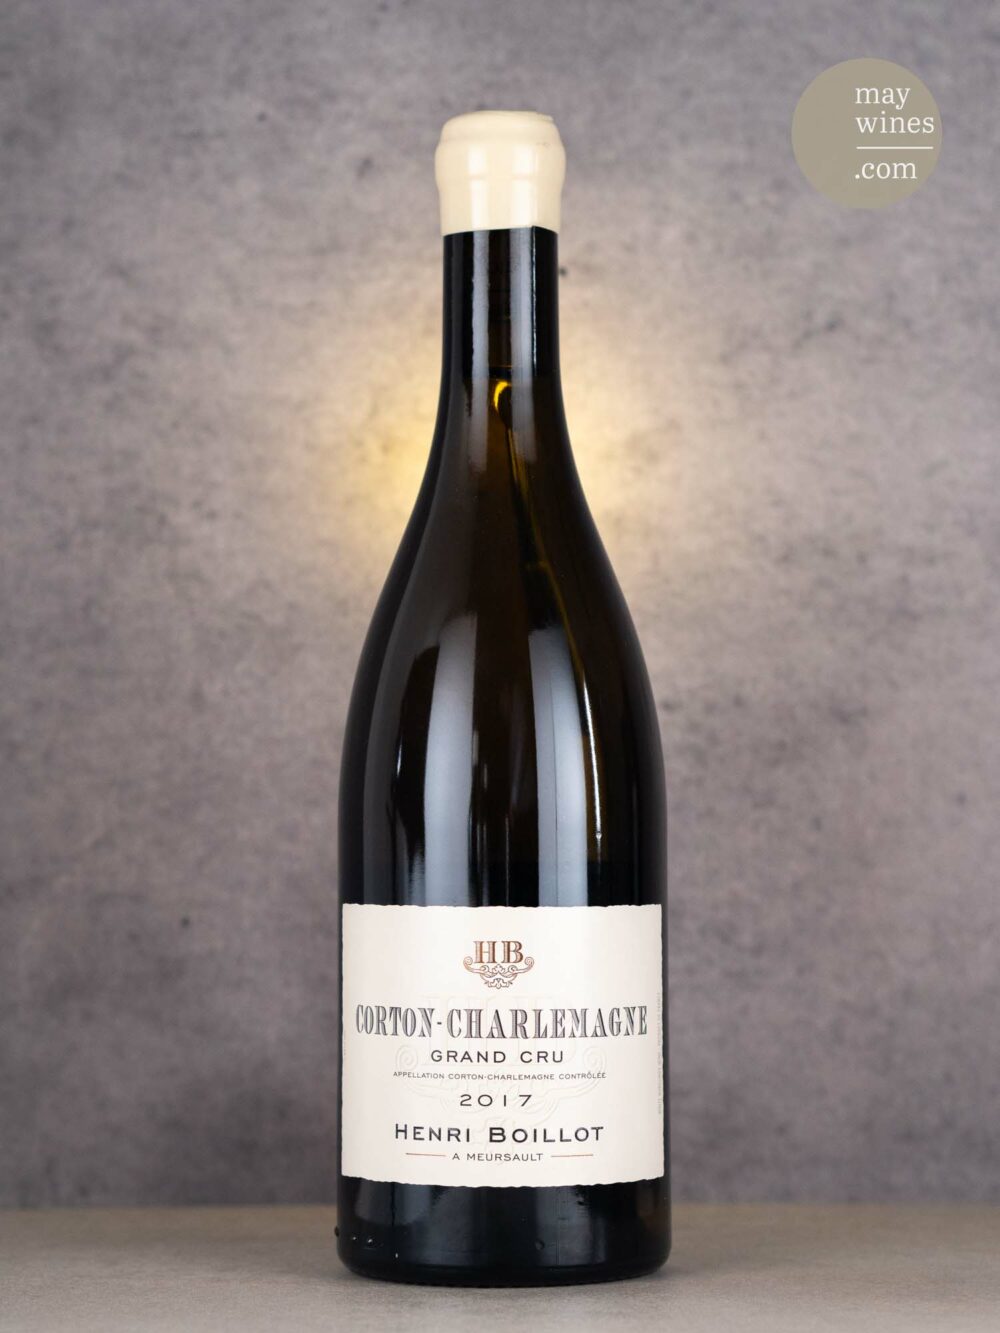 May Wines – Weißwein – 2017 Corton-Charlemagne Grand Cru - Henri Boillot